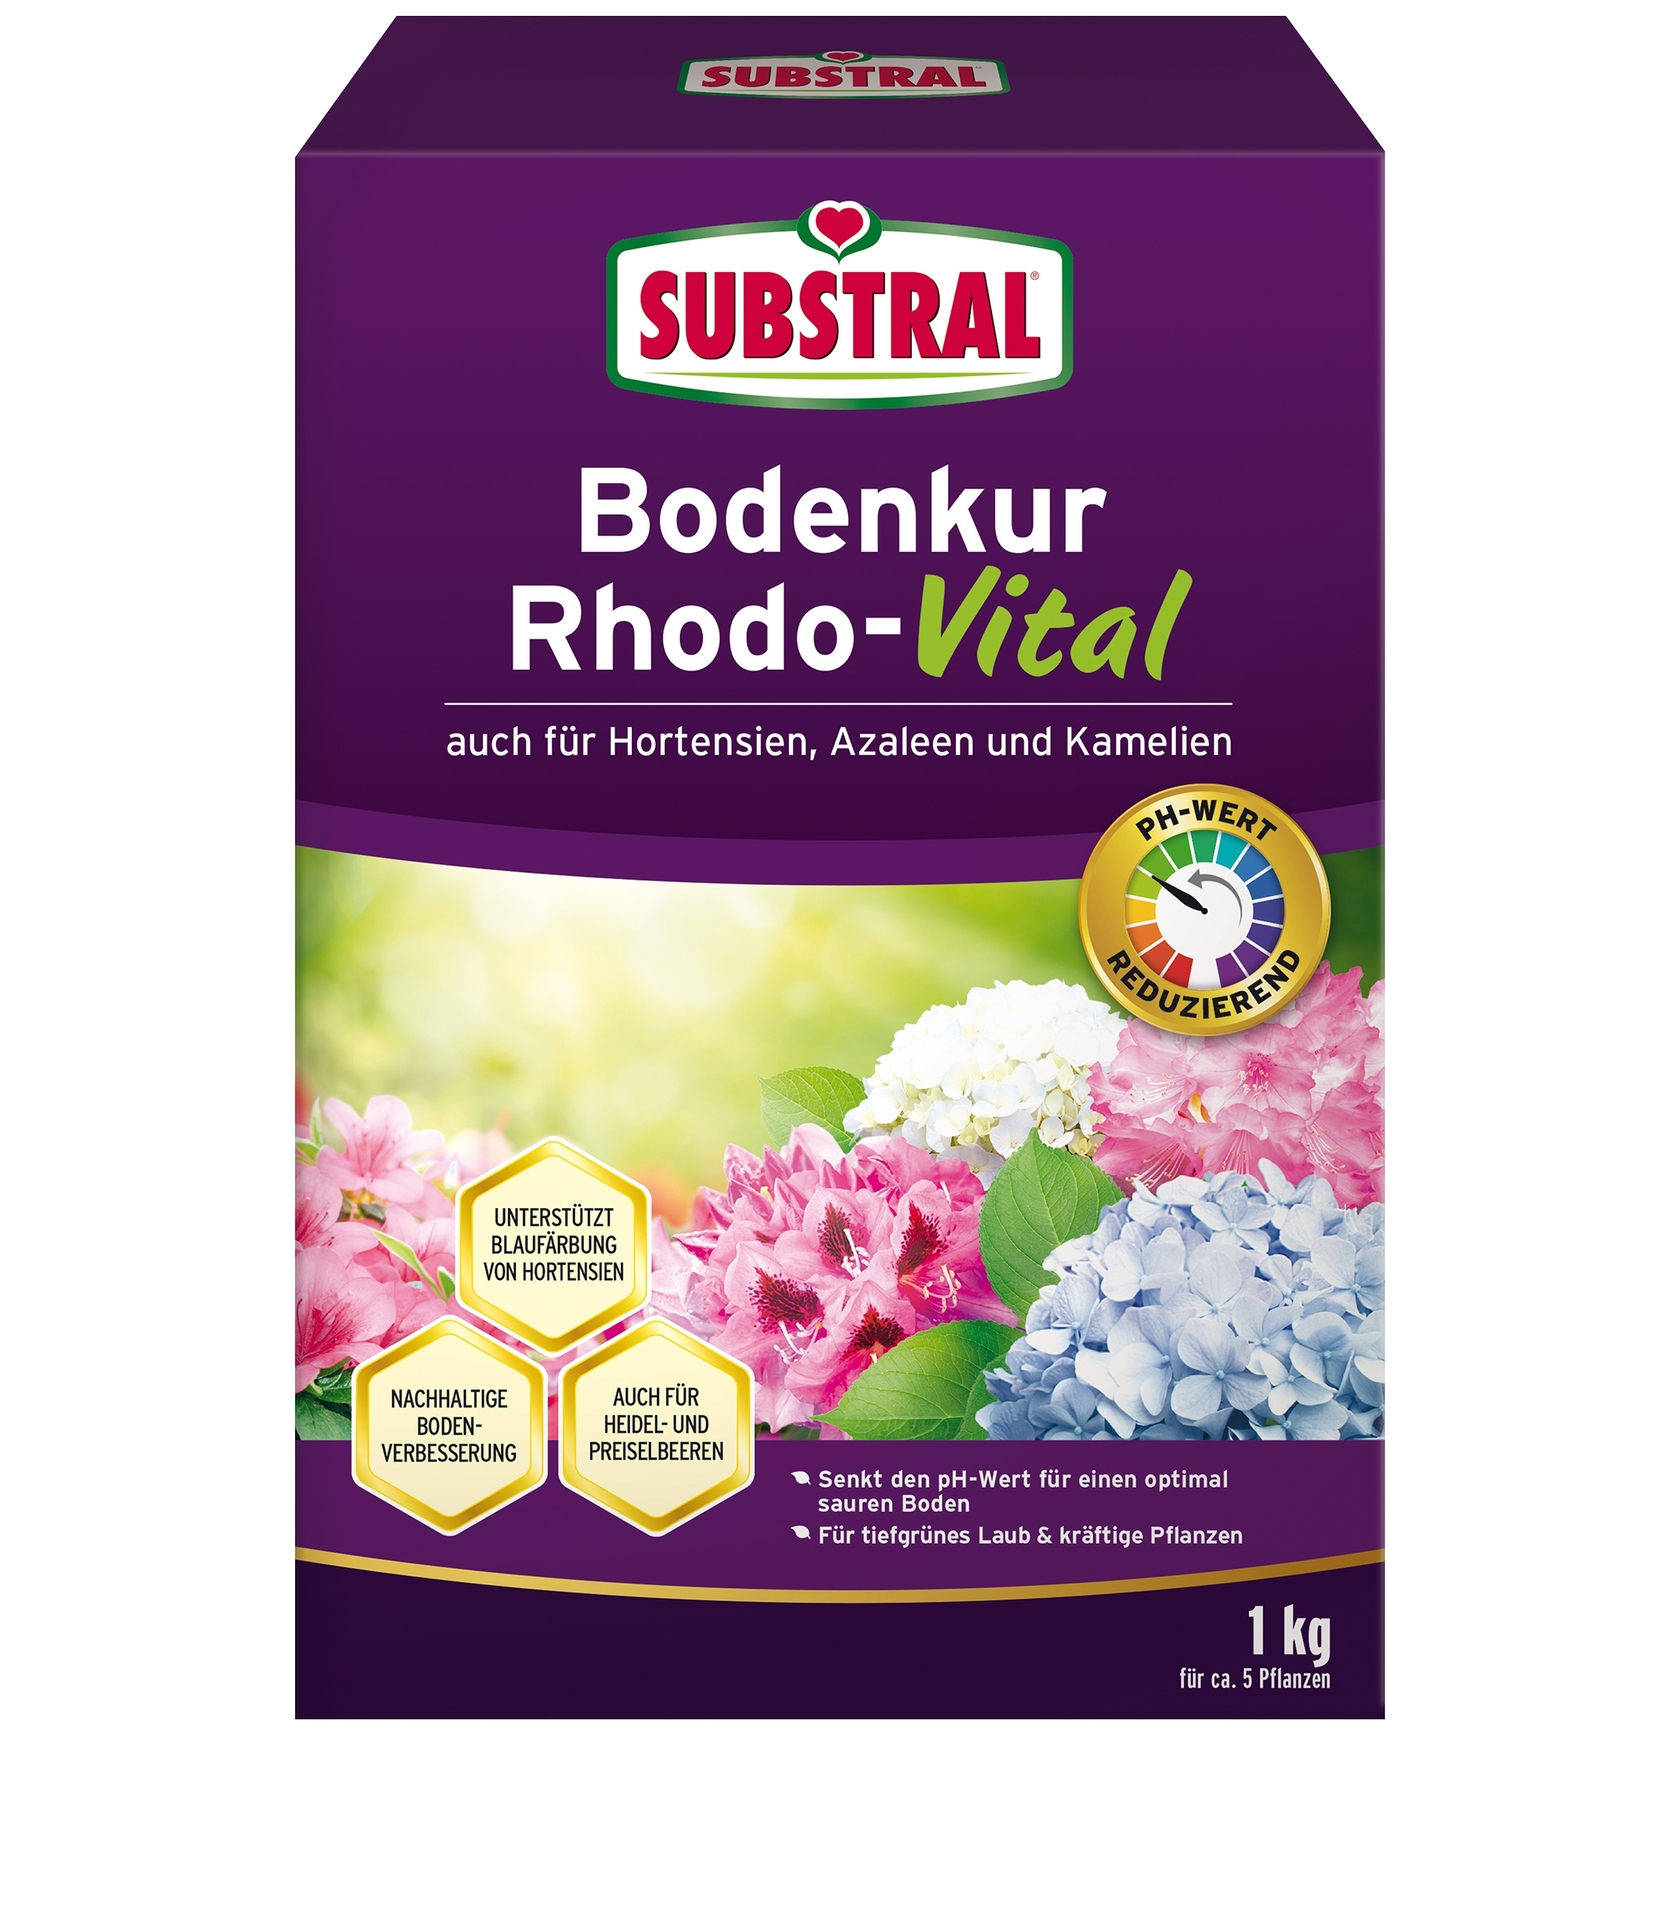 Evergreen Bodenkur Rhodo-Vital